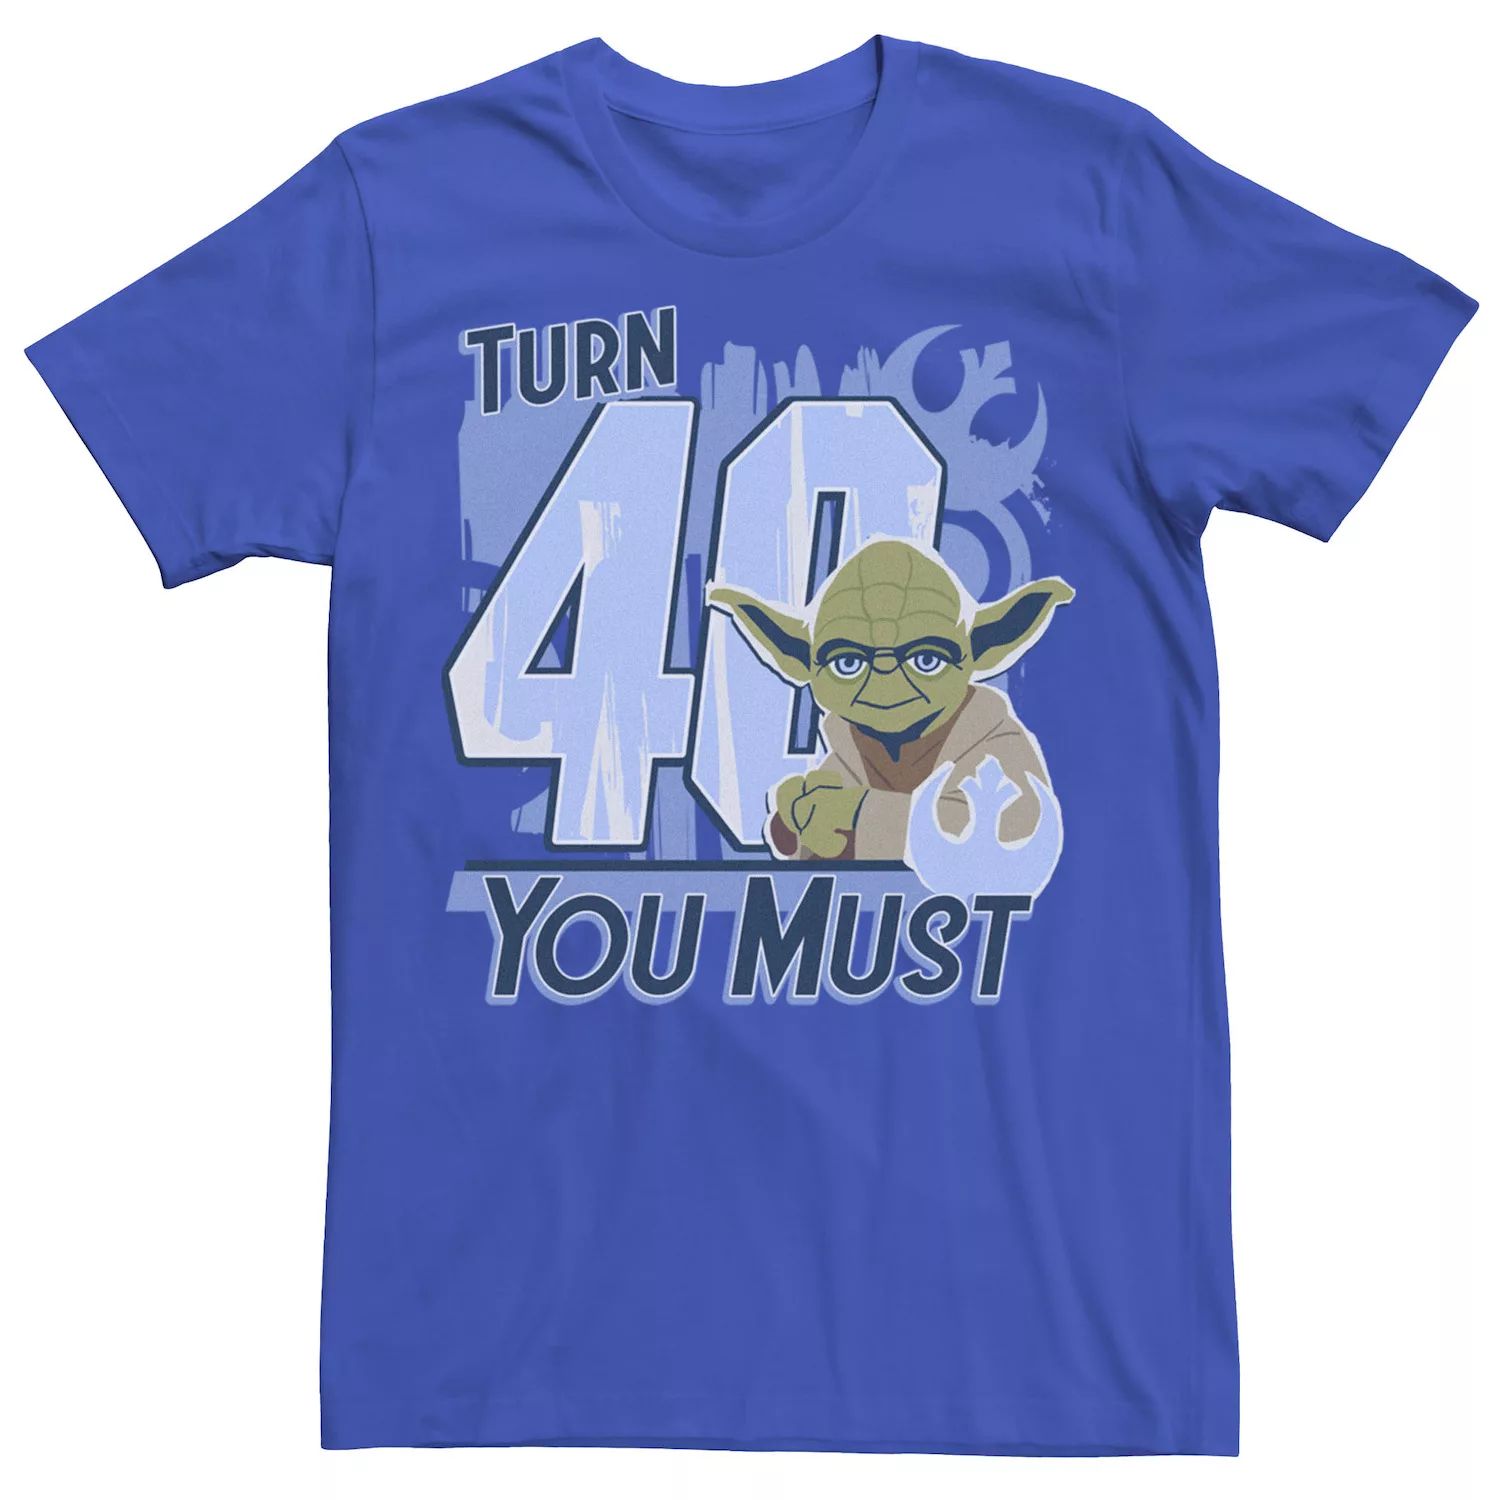 Мужская футболка с логотипом Star Wars Yoda Turn 40 You Must Rebel и графическим рисунком с портретом